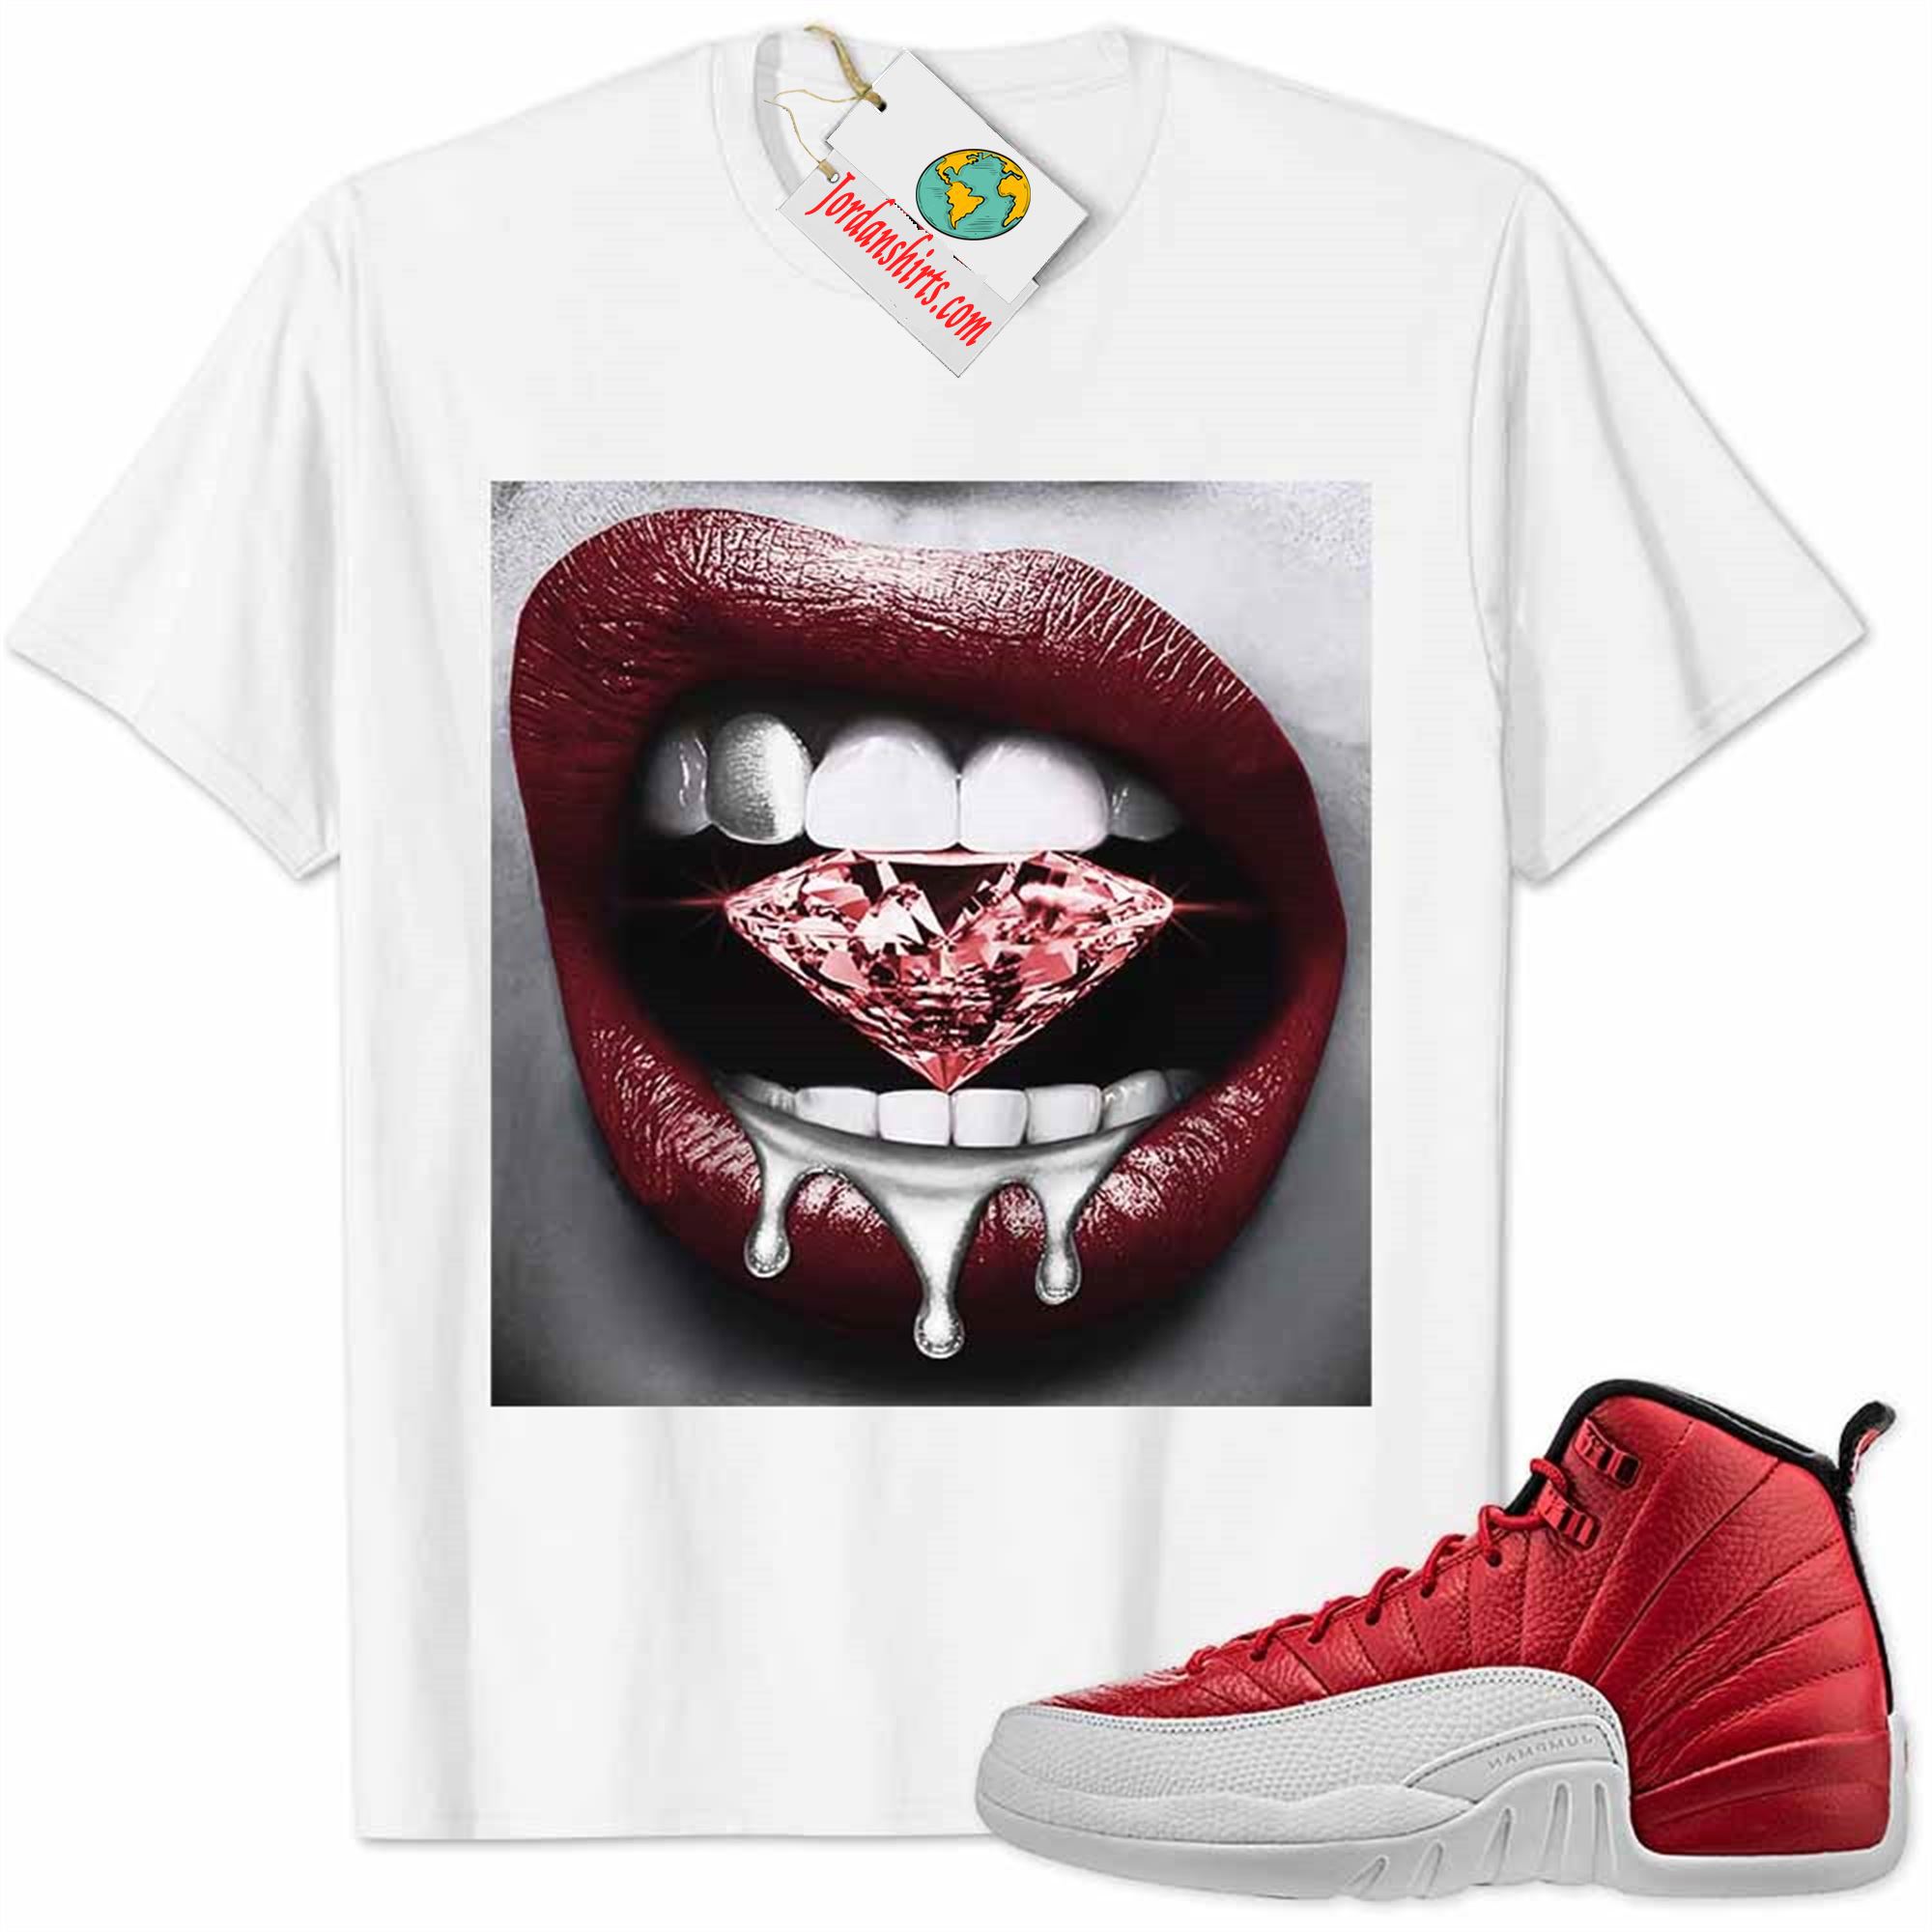 Jordan 12 Shirt, Jordan 12 Gym Red Shirt Sexy Lip Bite Diamond Dripping White Plus Size Up To 5xl